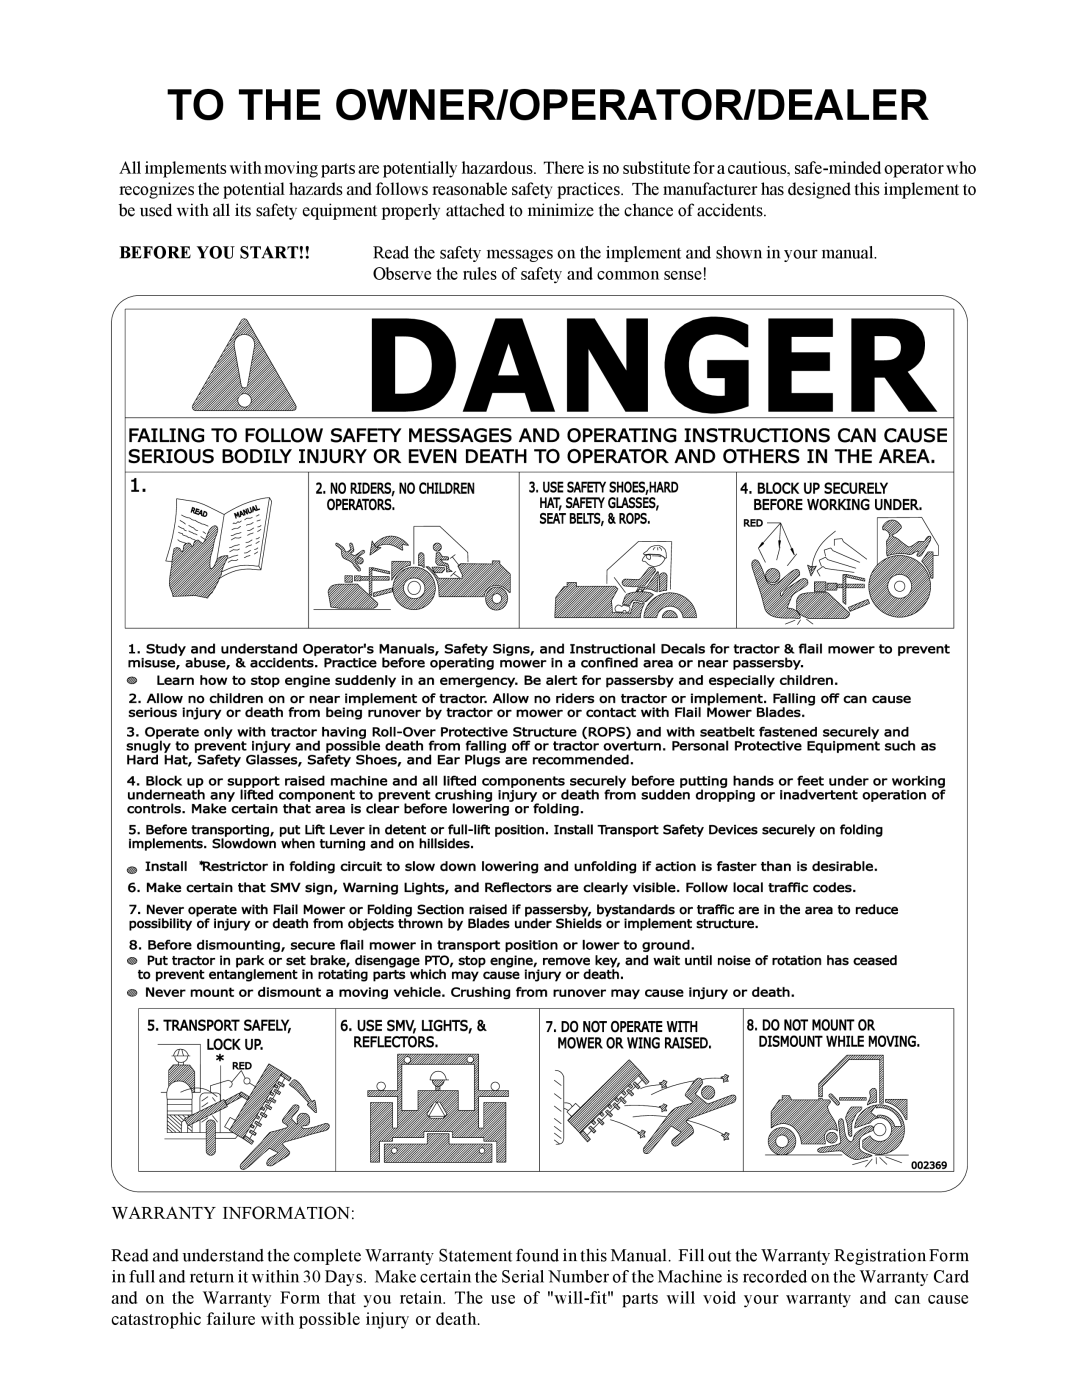 Alamo 02986941P manual Danger, To The Owner/Operator/Dealer 